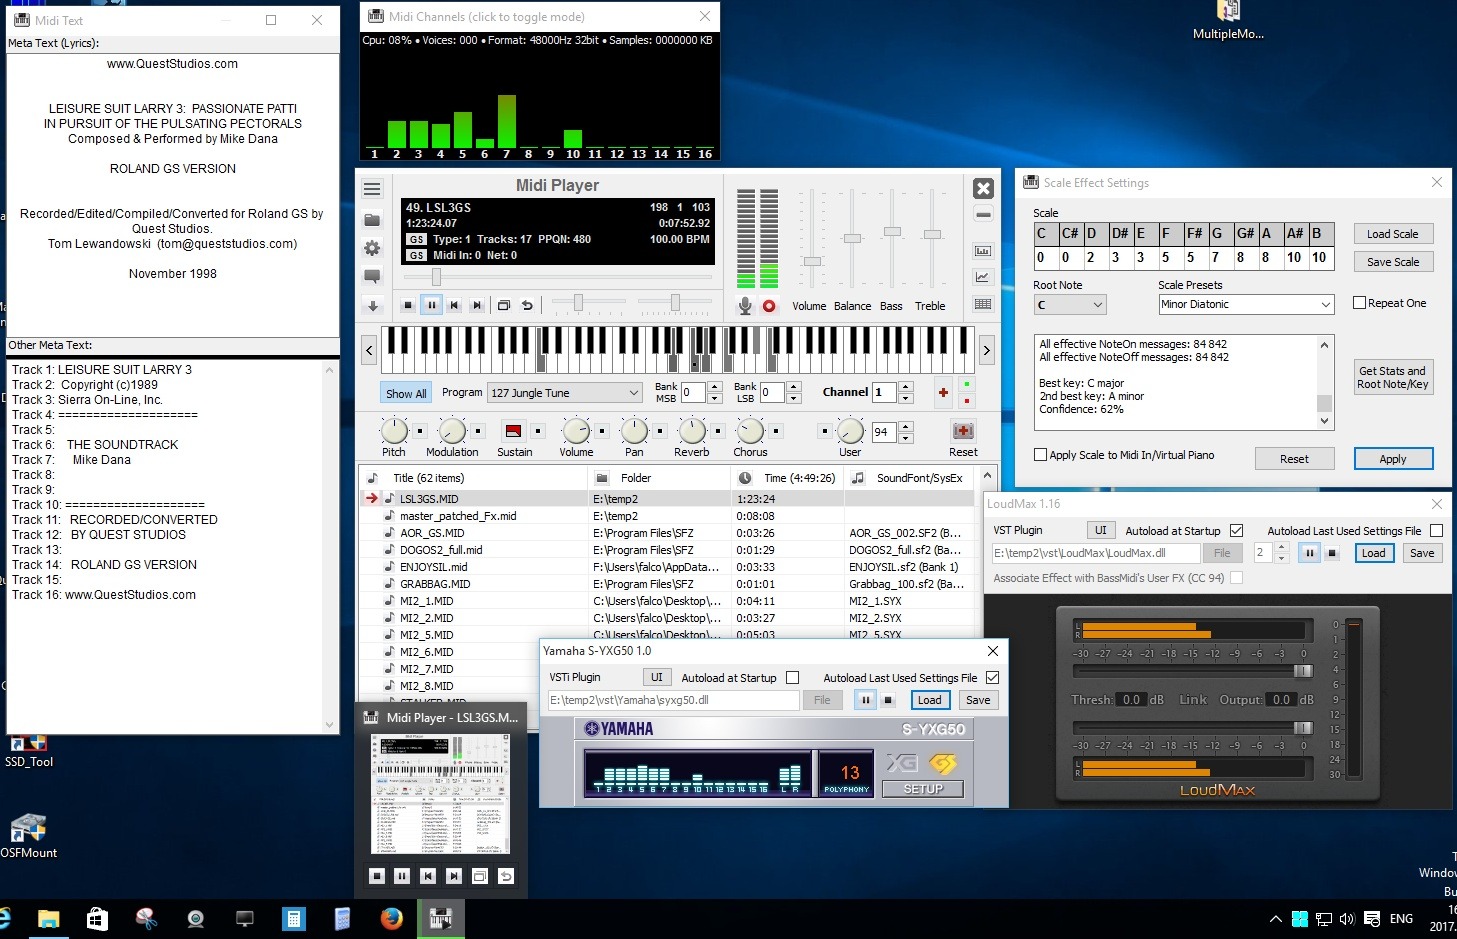 Midi Player screenshot